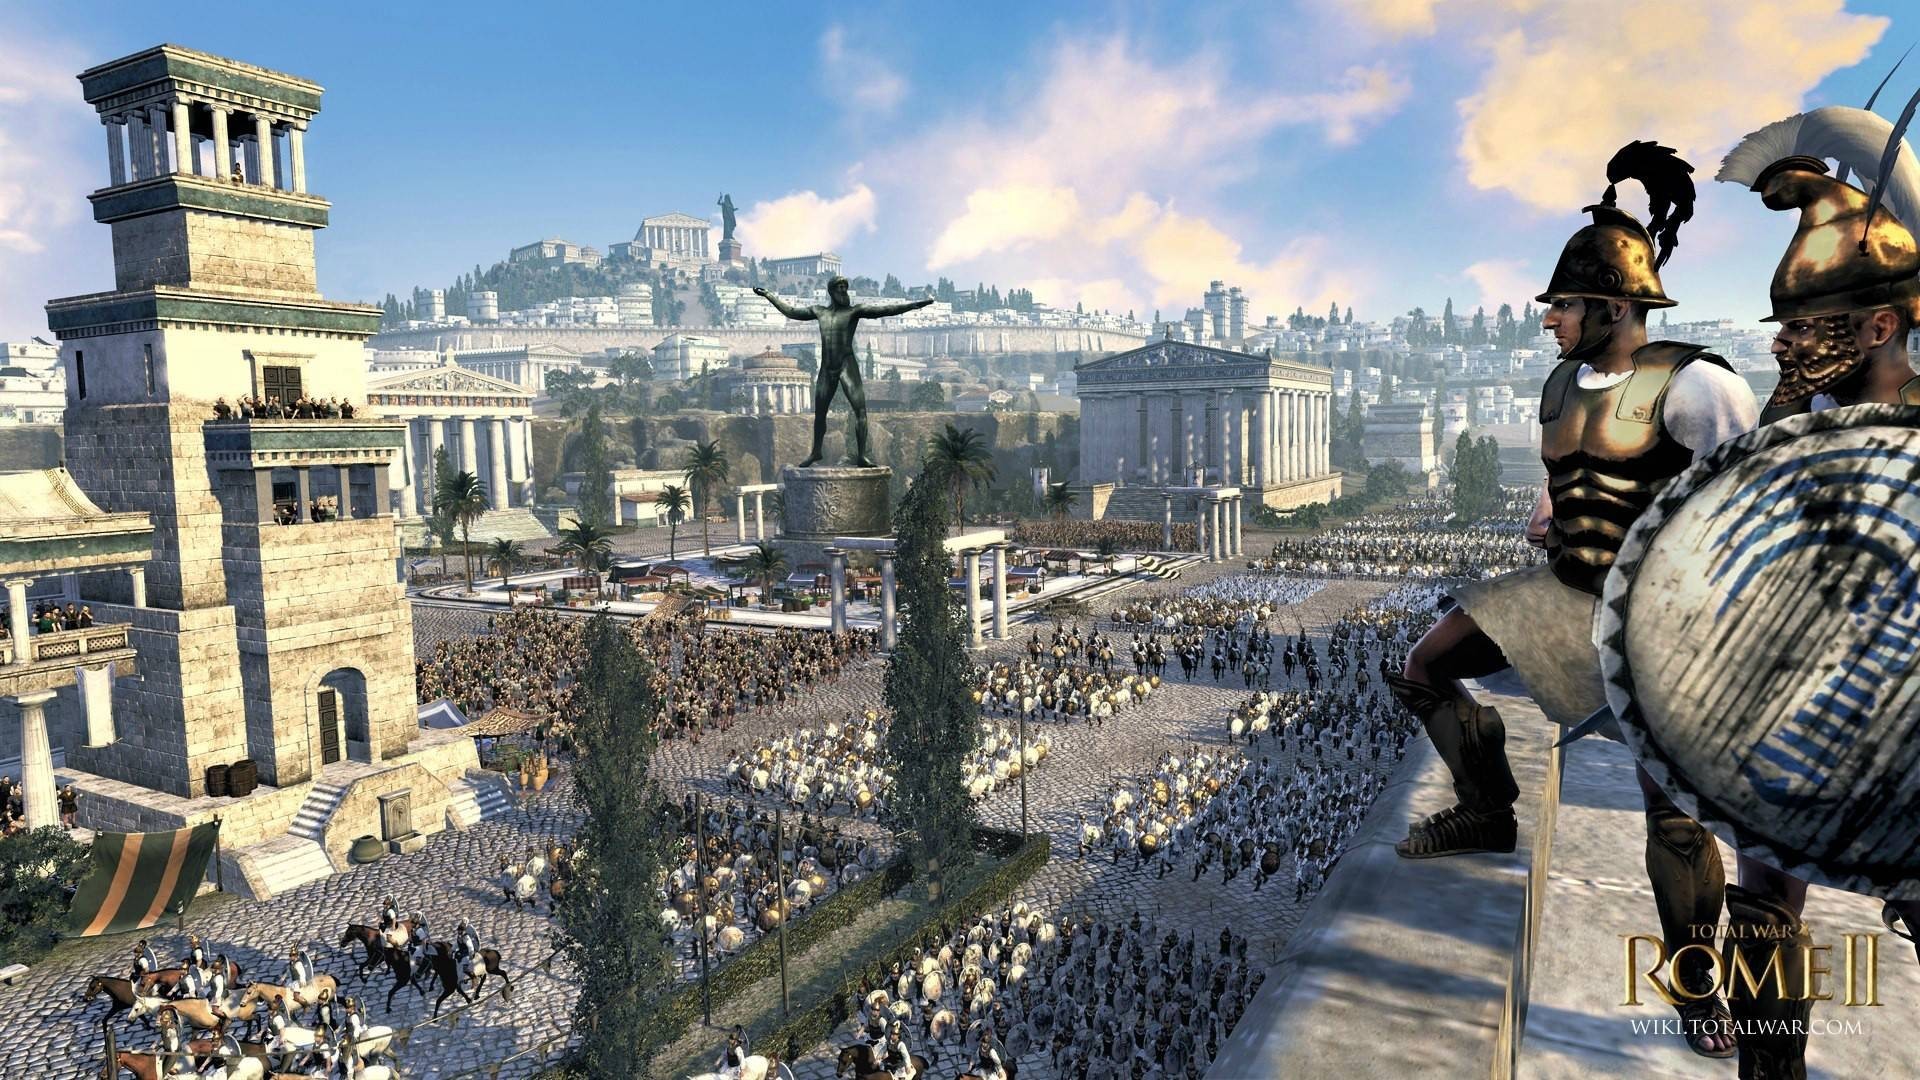 SuperHD.pics: Total War: Rome 2 desktop bakcgrounds